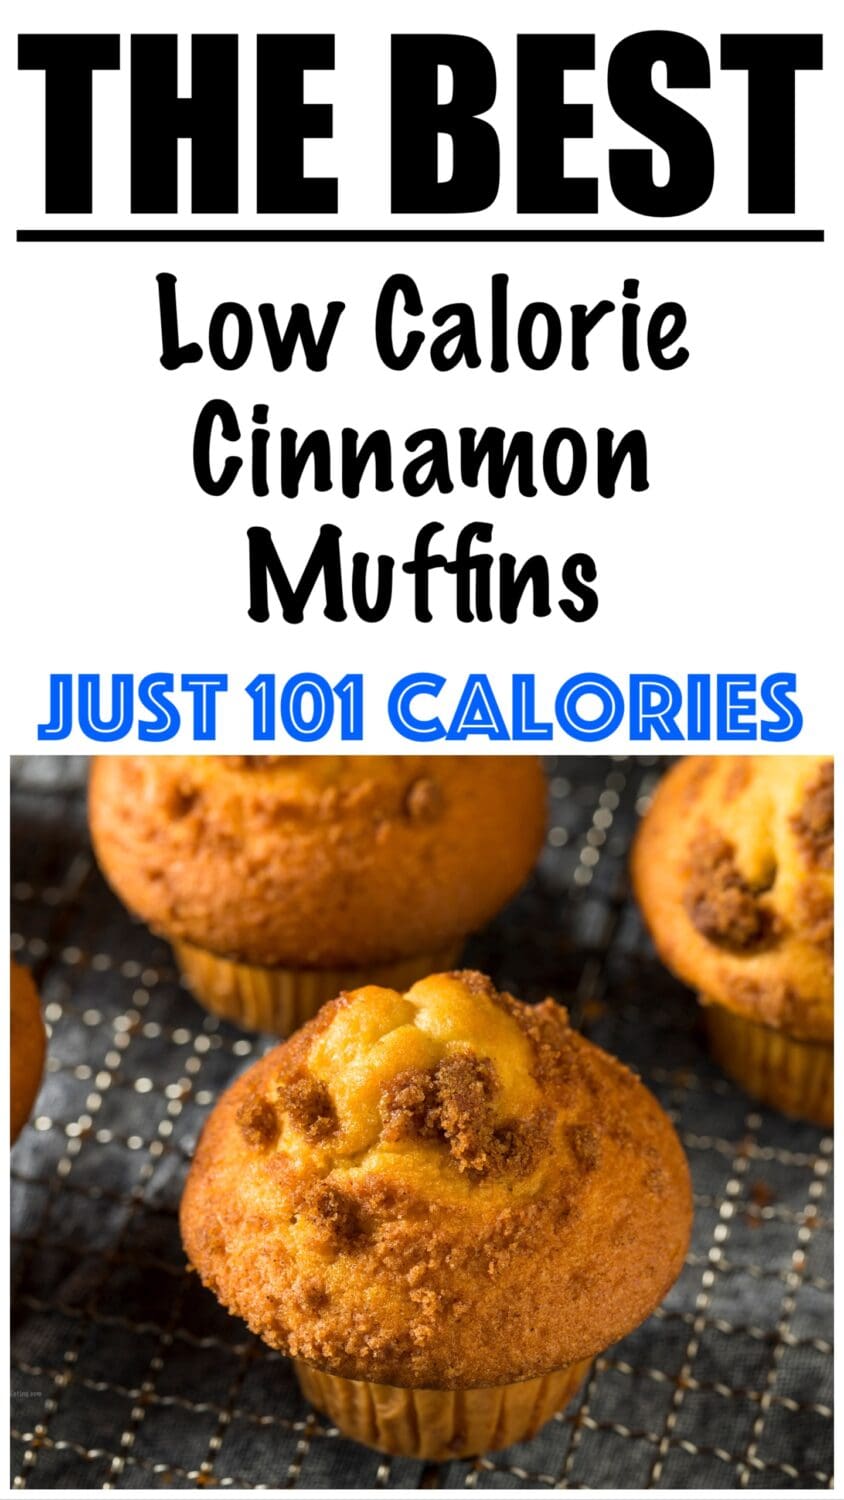 Low Calorie Cinnamon Muffins